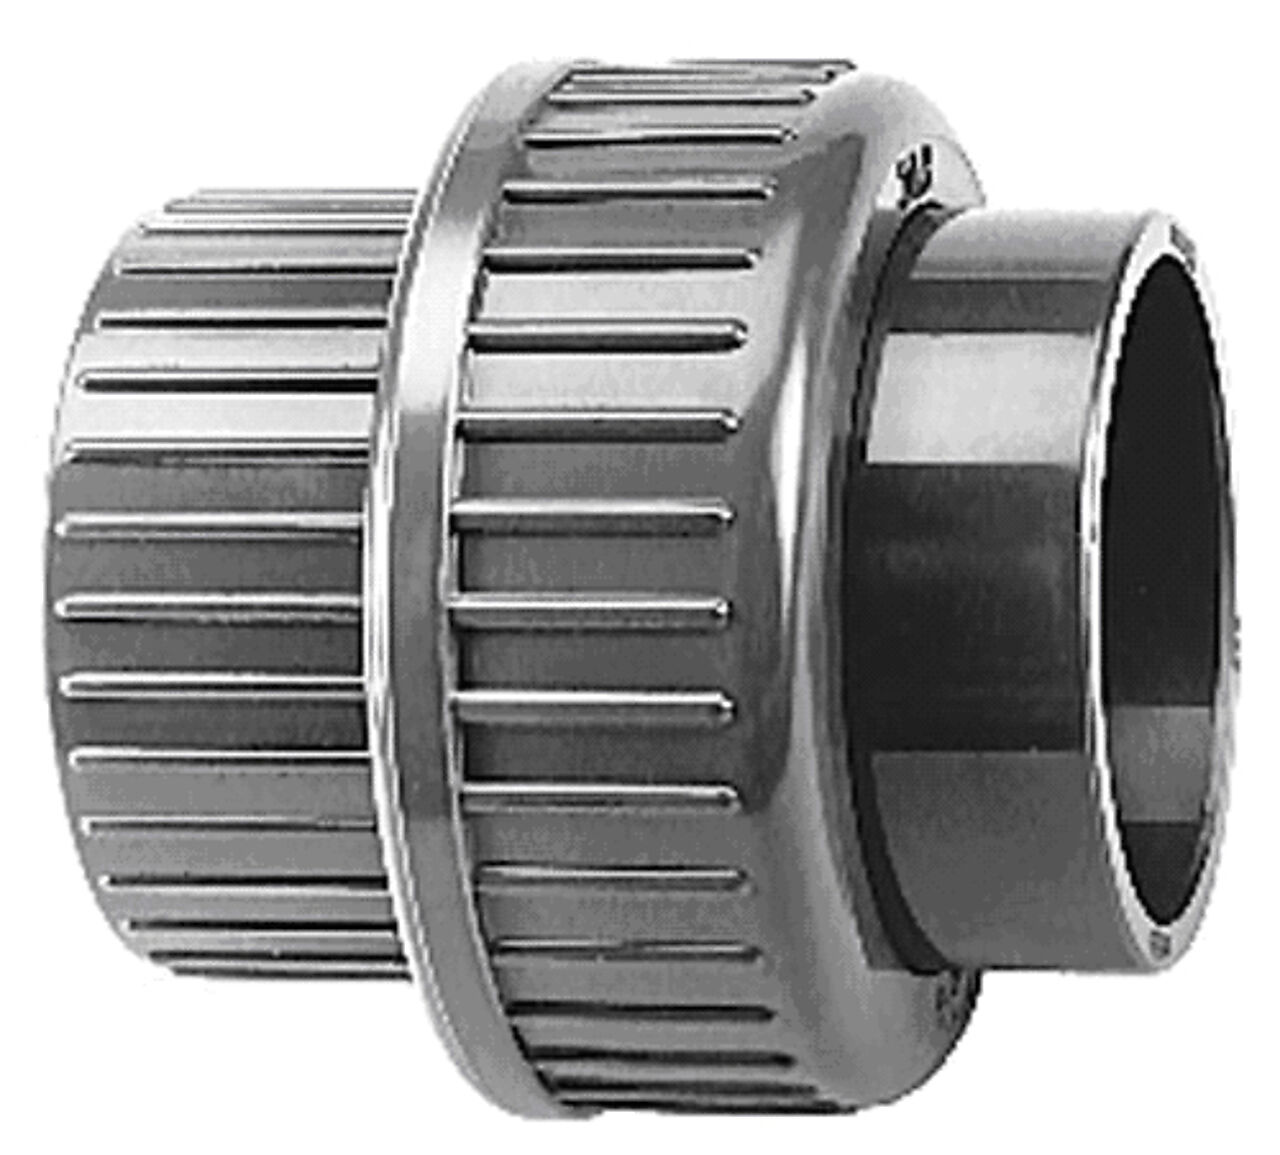 Georg Fischer Union PVC-U 50 mm, metrisk, PN16, EPDM O-ring, leverandørnr. 721 510 110 1